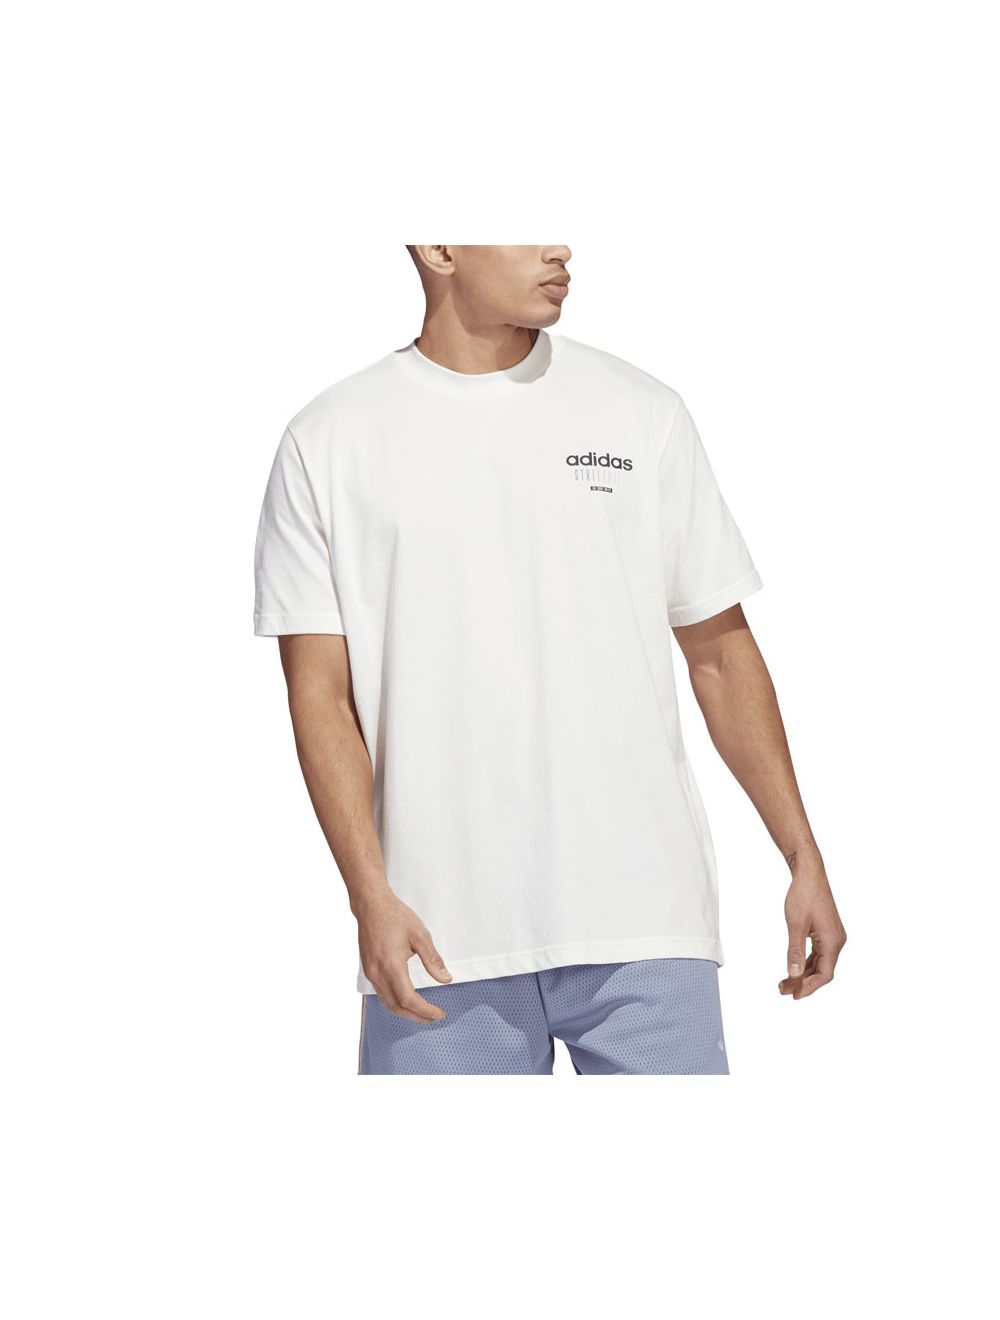 adidas Originals Basketball Streetball Graphic T-shirt Mens White